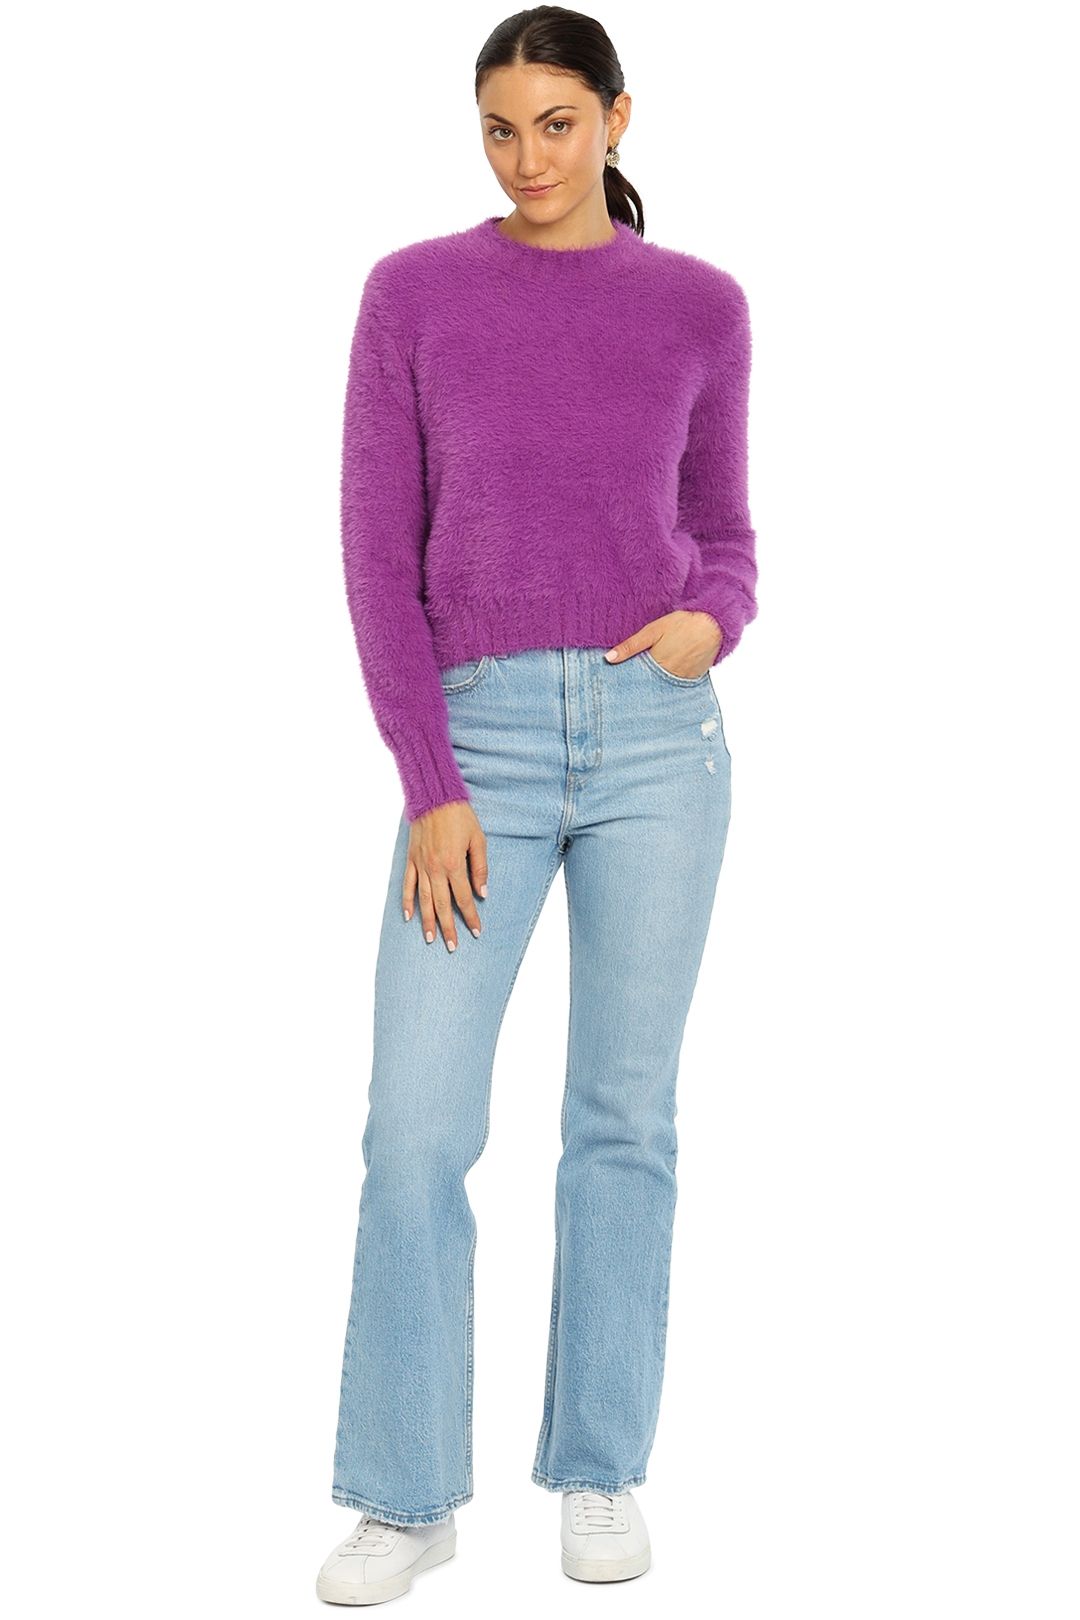 Neuw Denim Kate Knit Purple